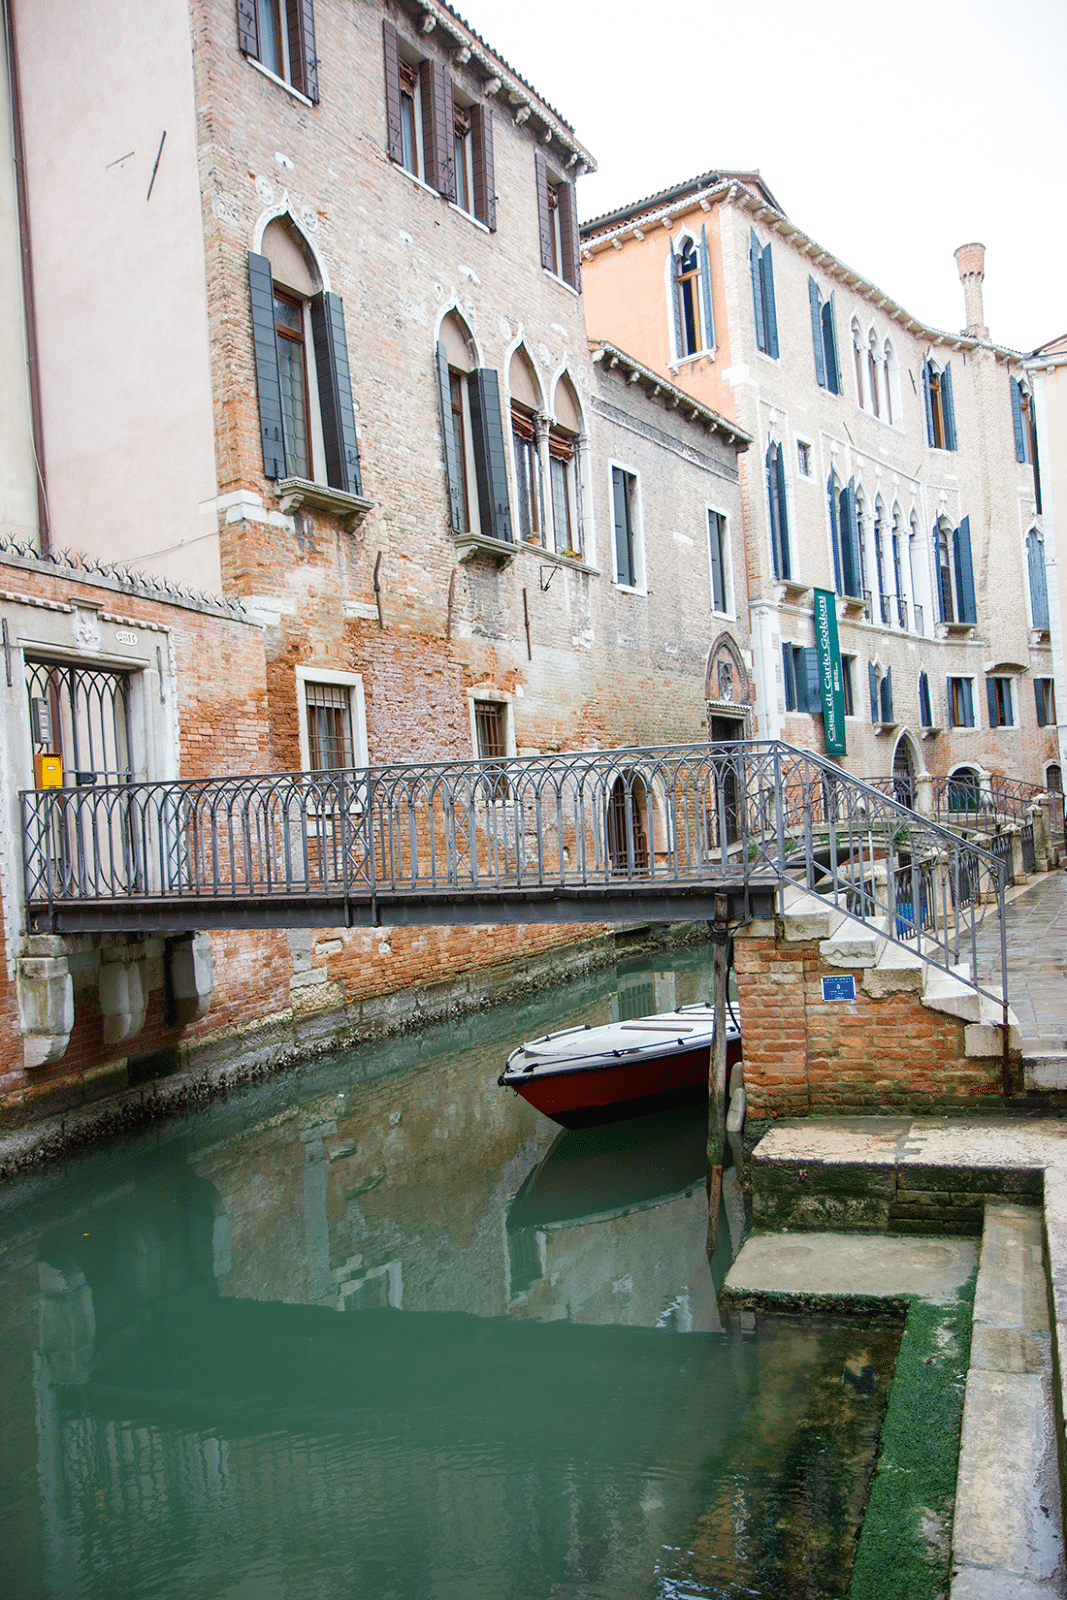 Sights in Venice, Italy. 